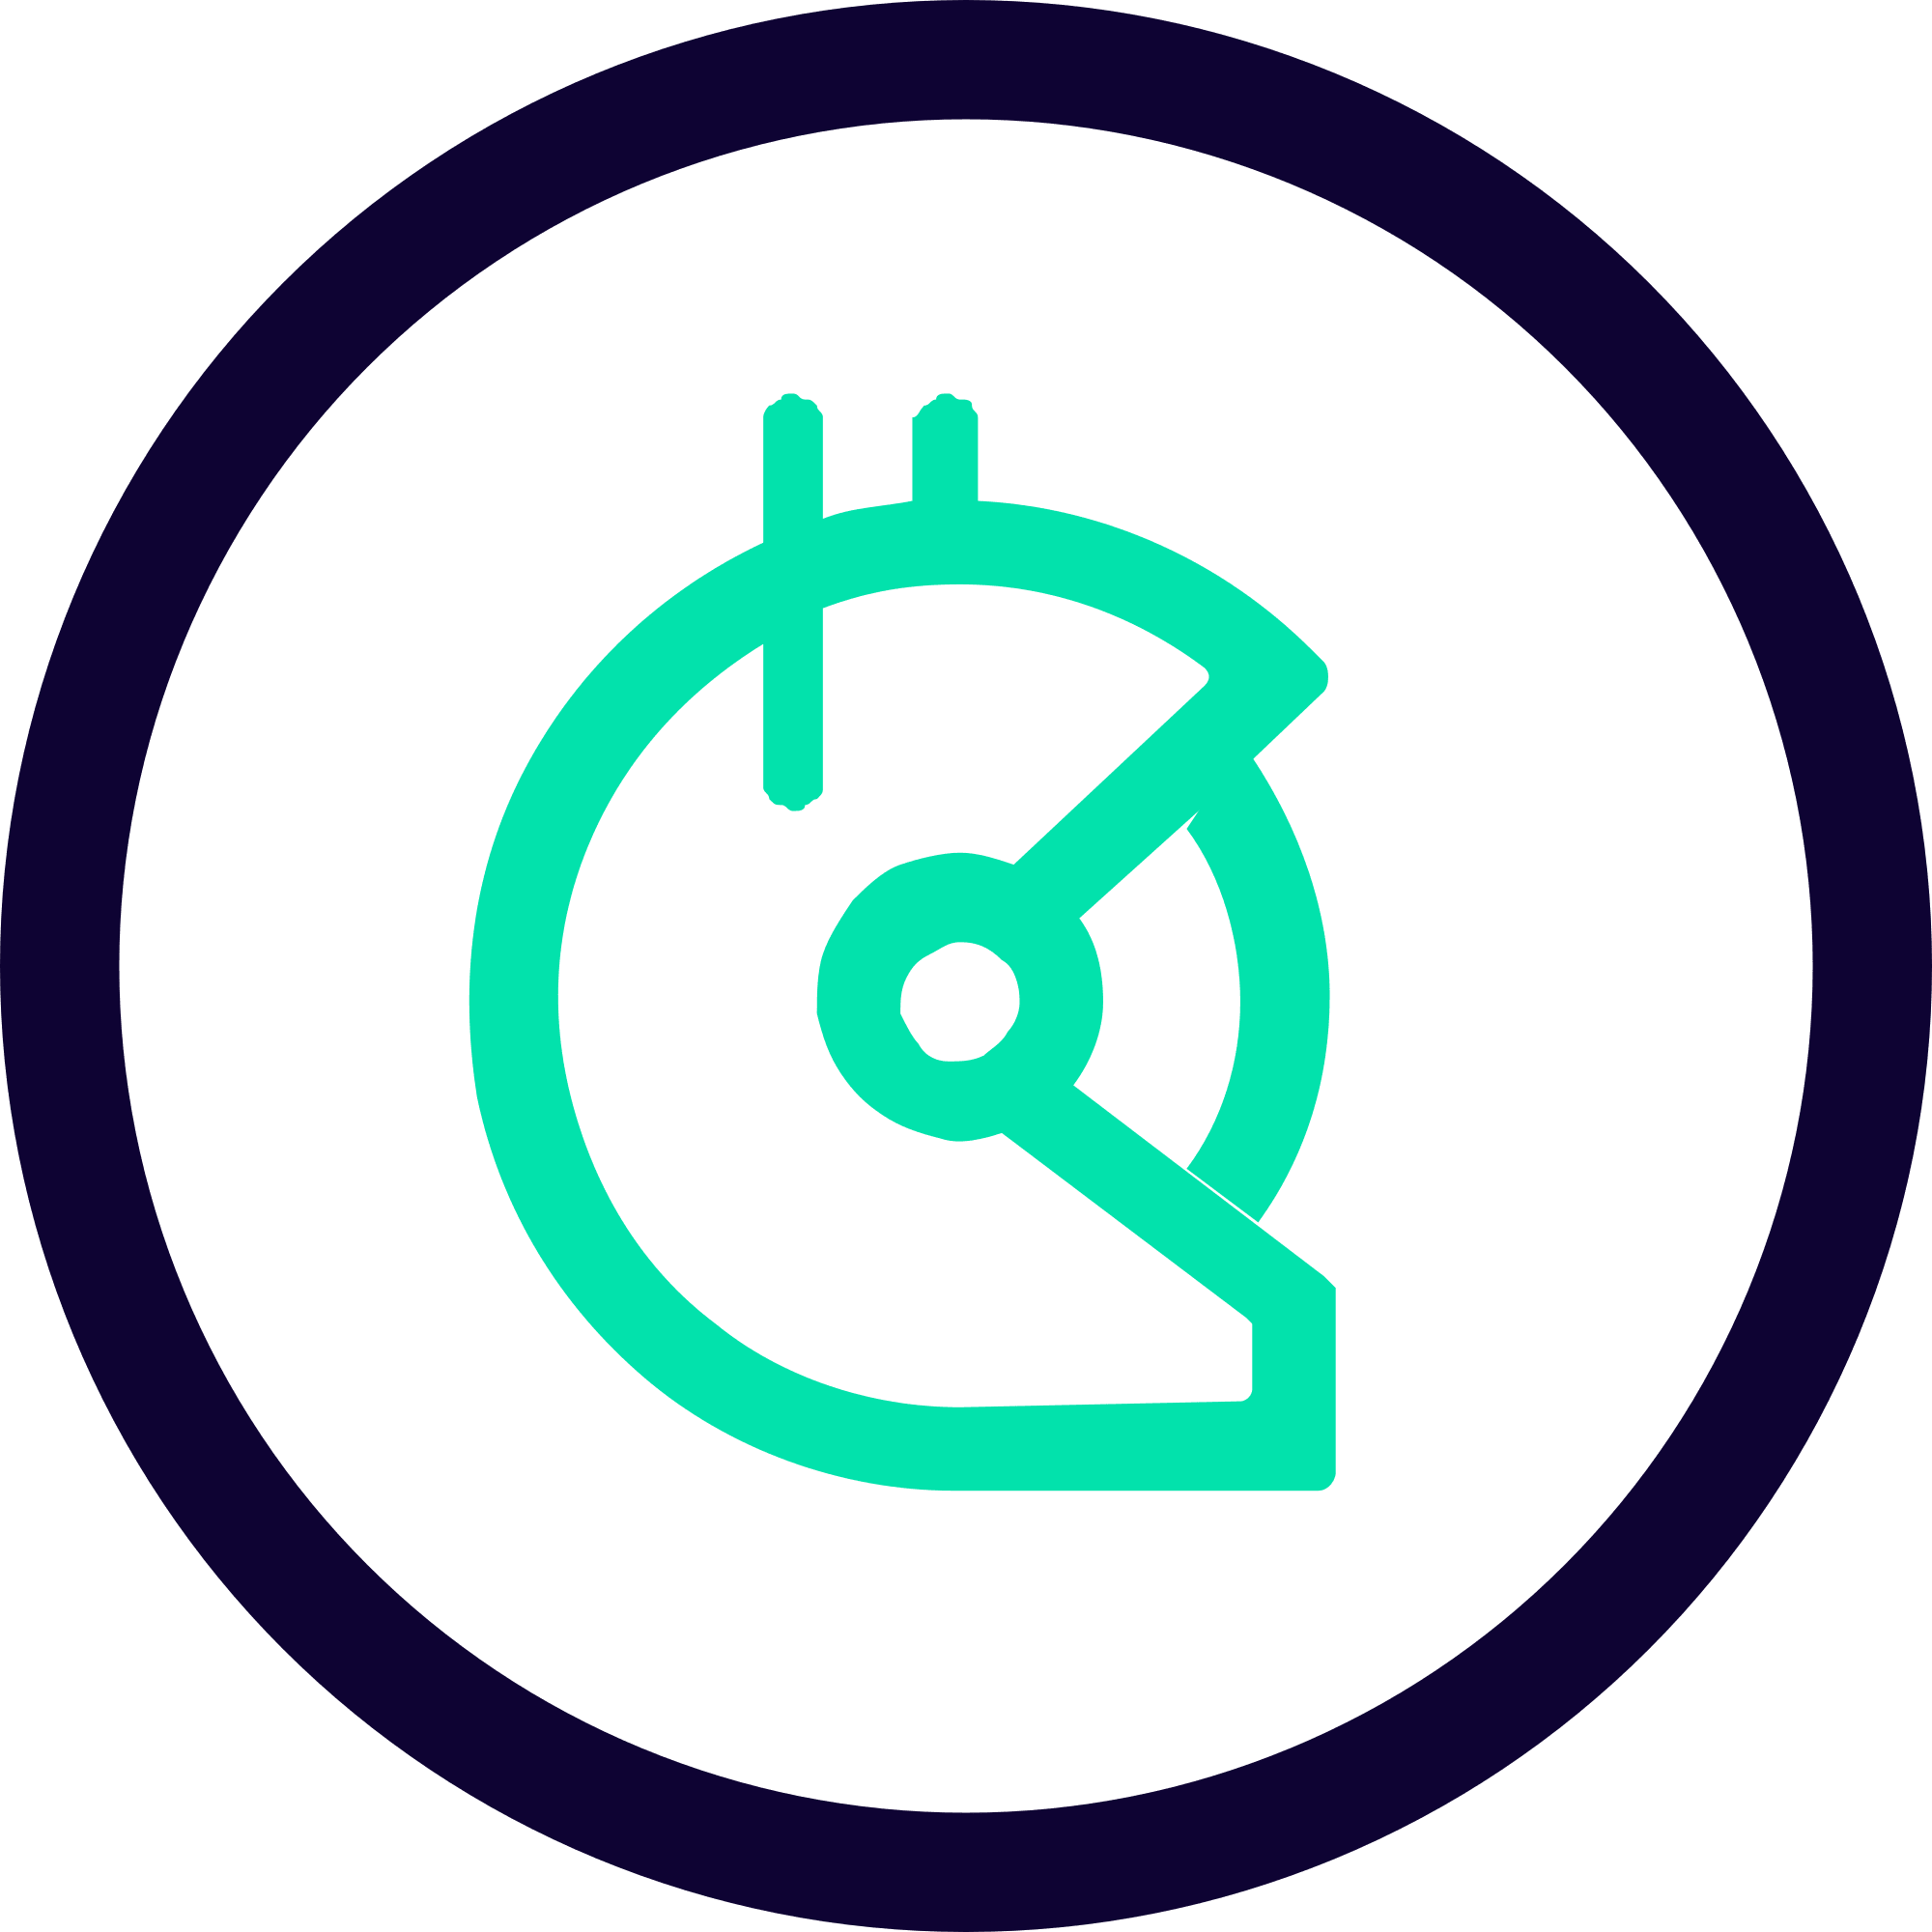 Gitcoin logo in png format